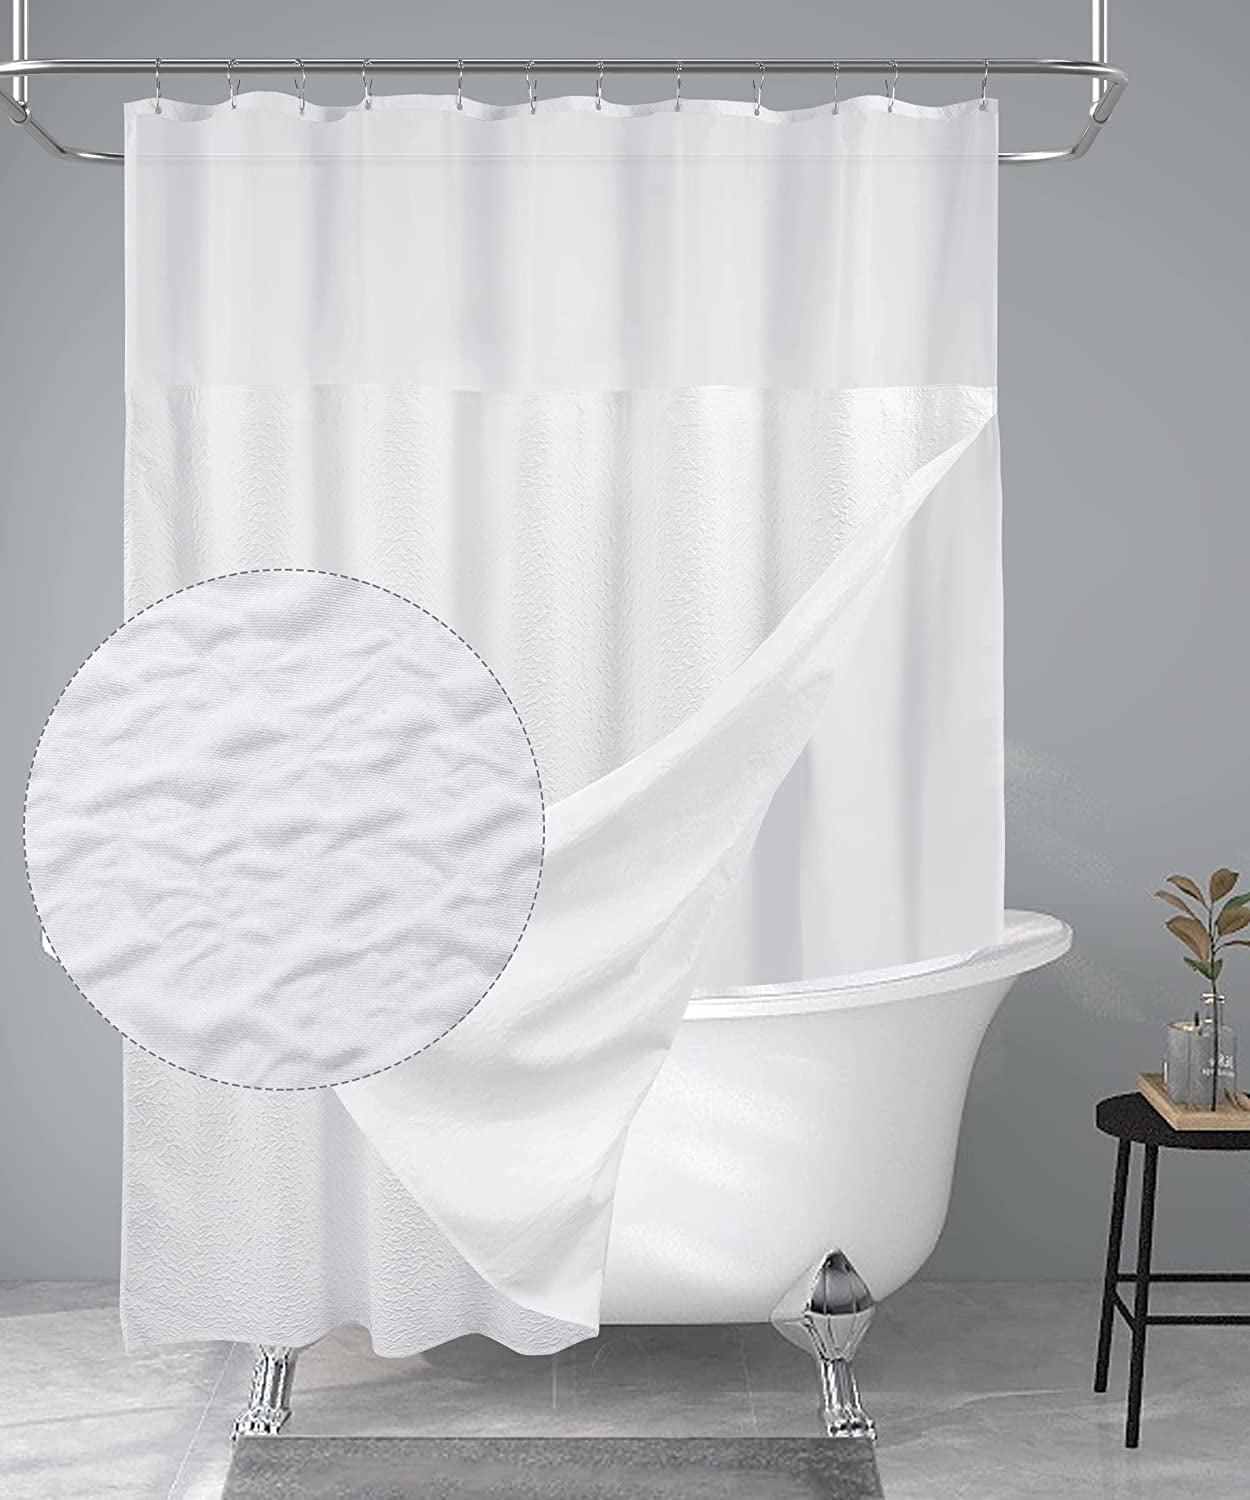 Snowy Lotus Zen River Yoga Bathroom Waterproof Fabric Shower Curtain Hook 72x72" 